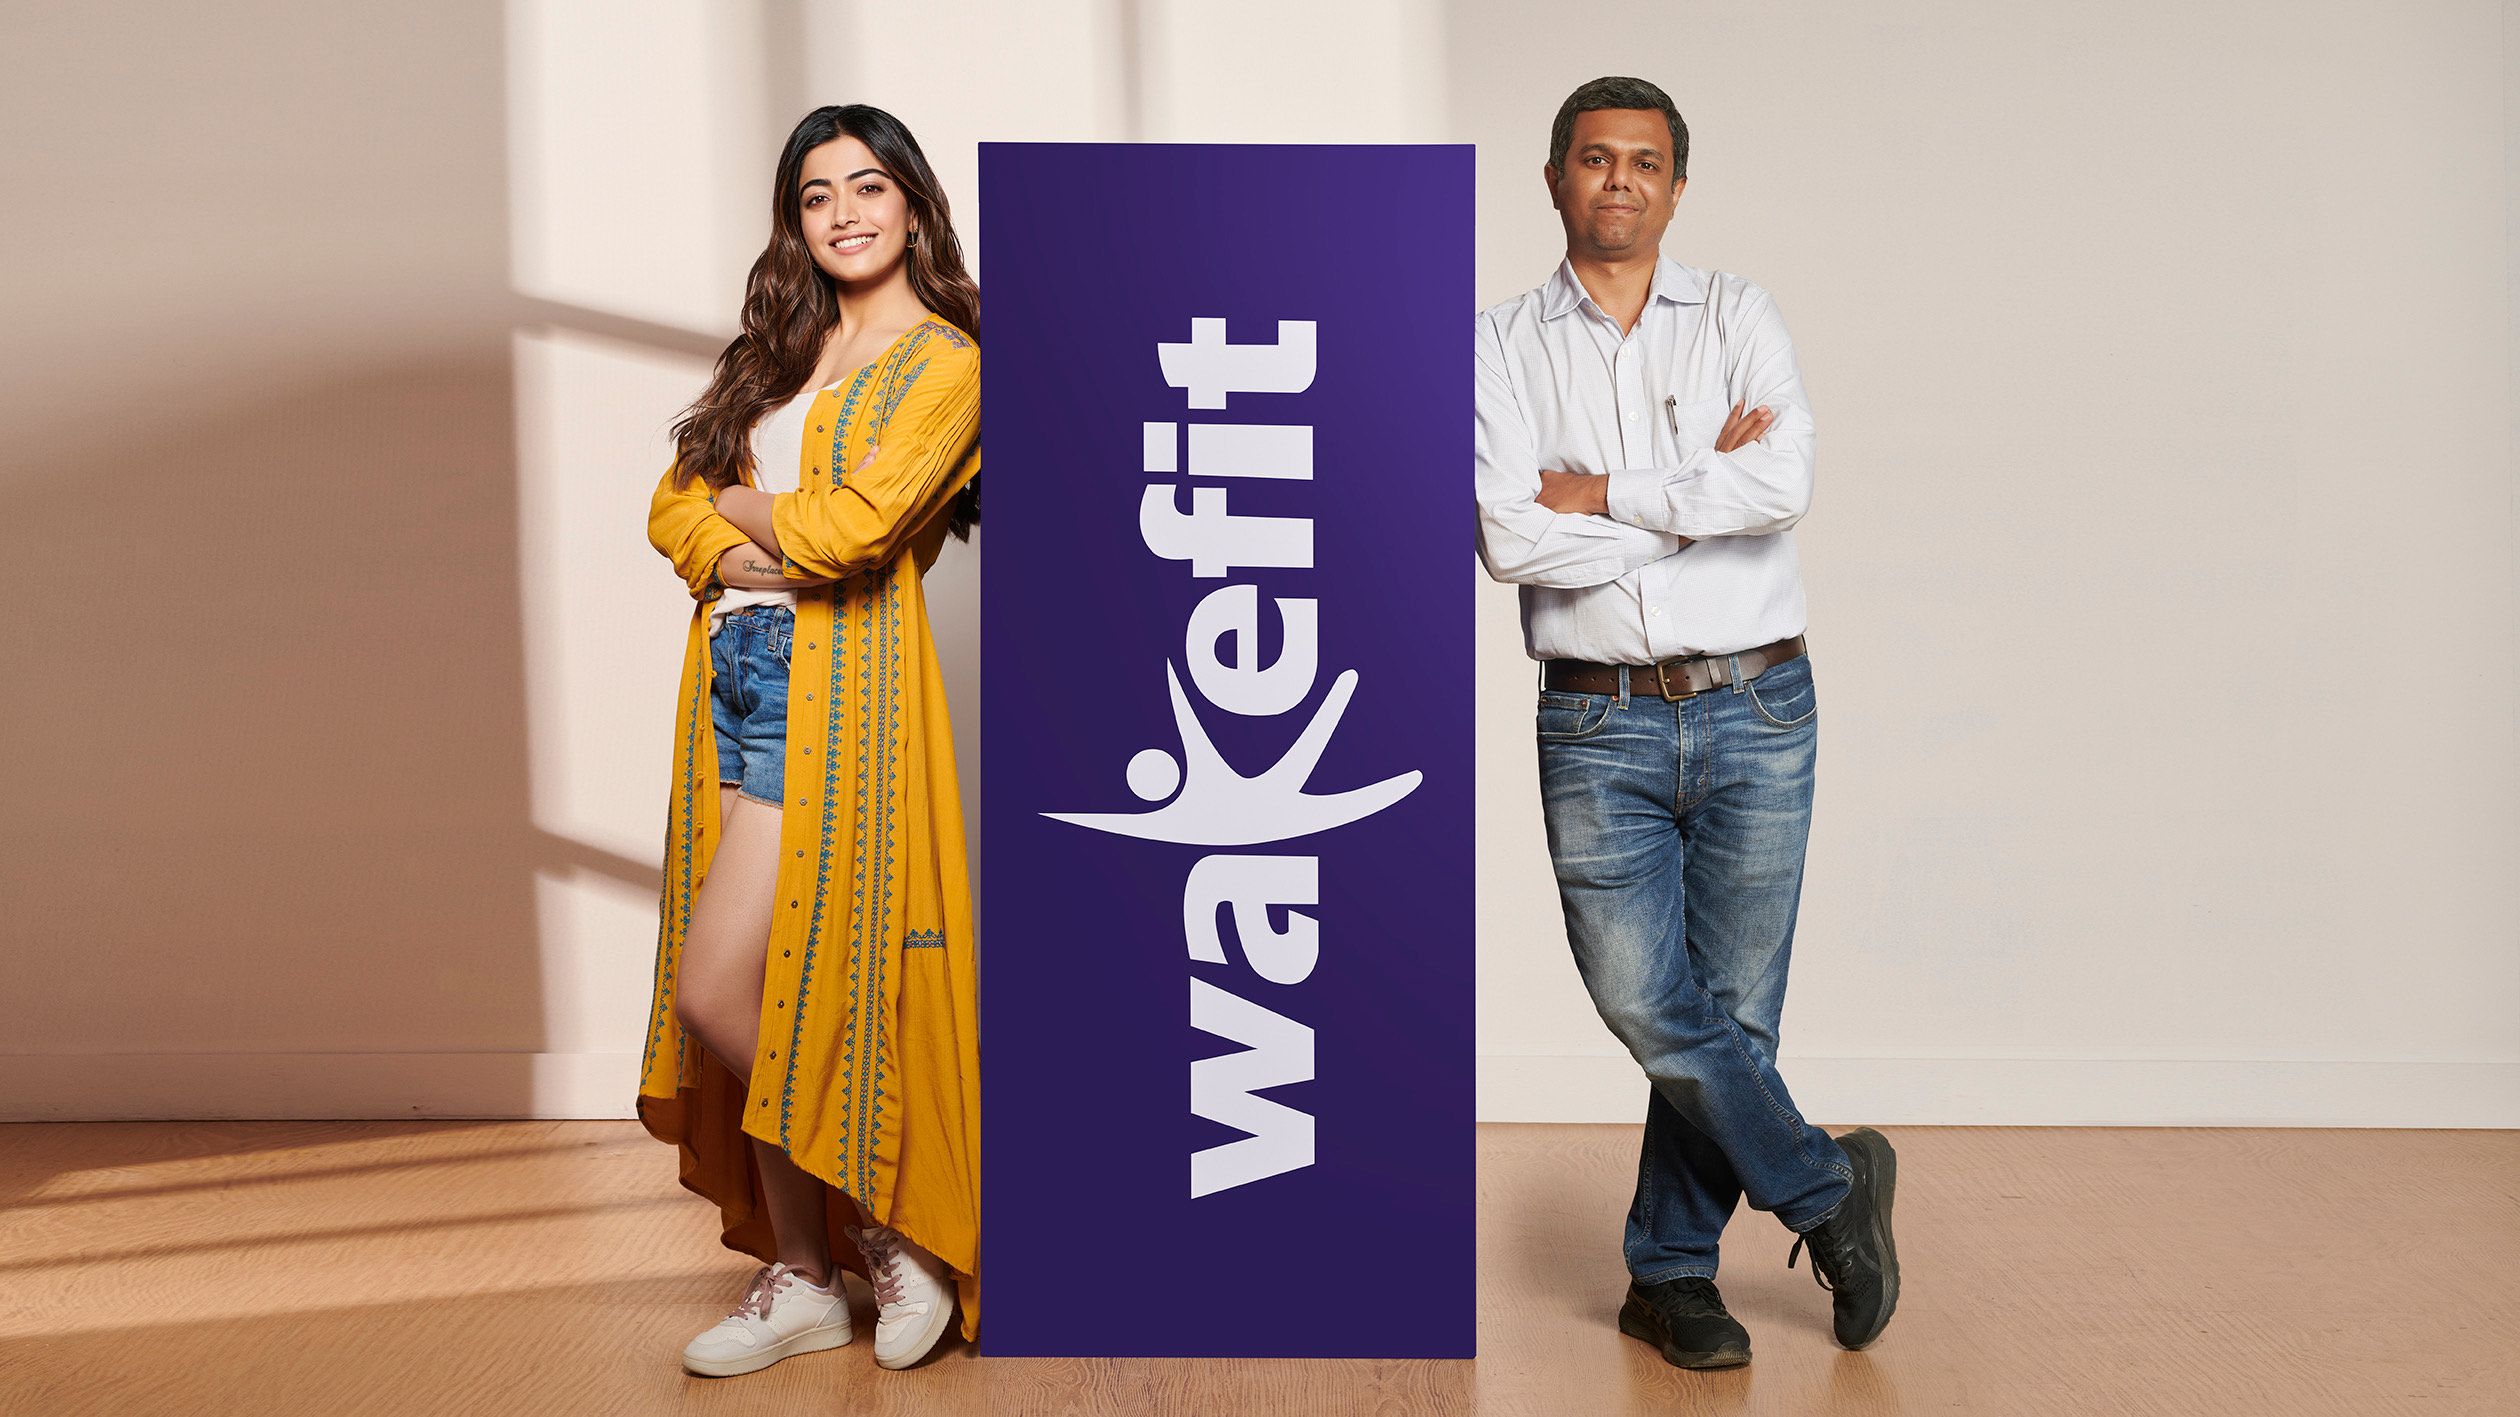 Eyeing further growth, sleep solutions startup Wakefit onboards Rashmika Mandanna as its first brand ambassador 